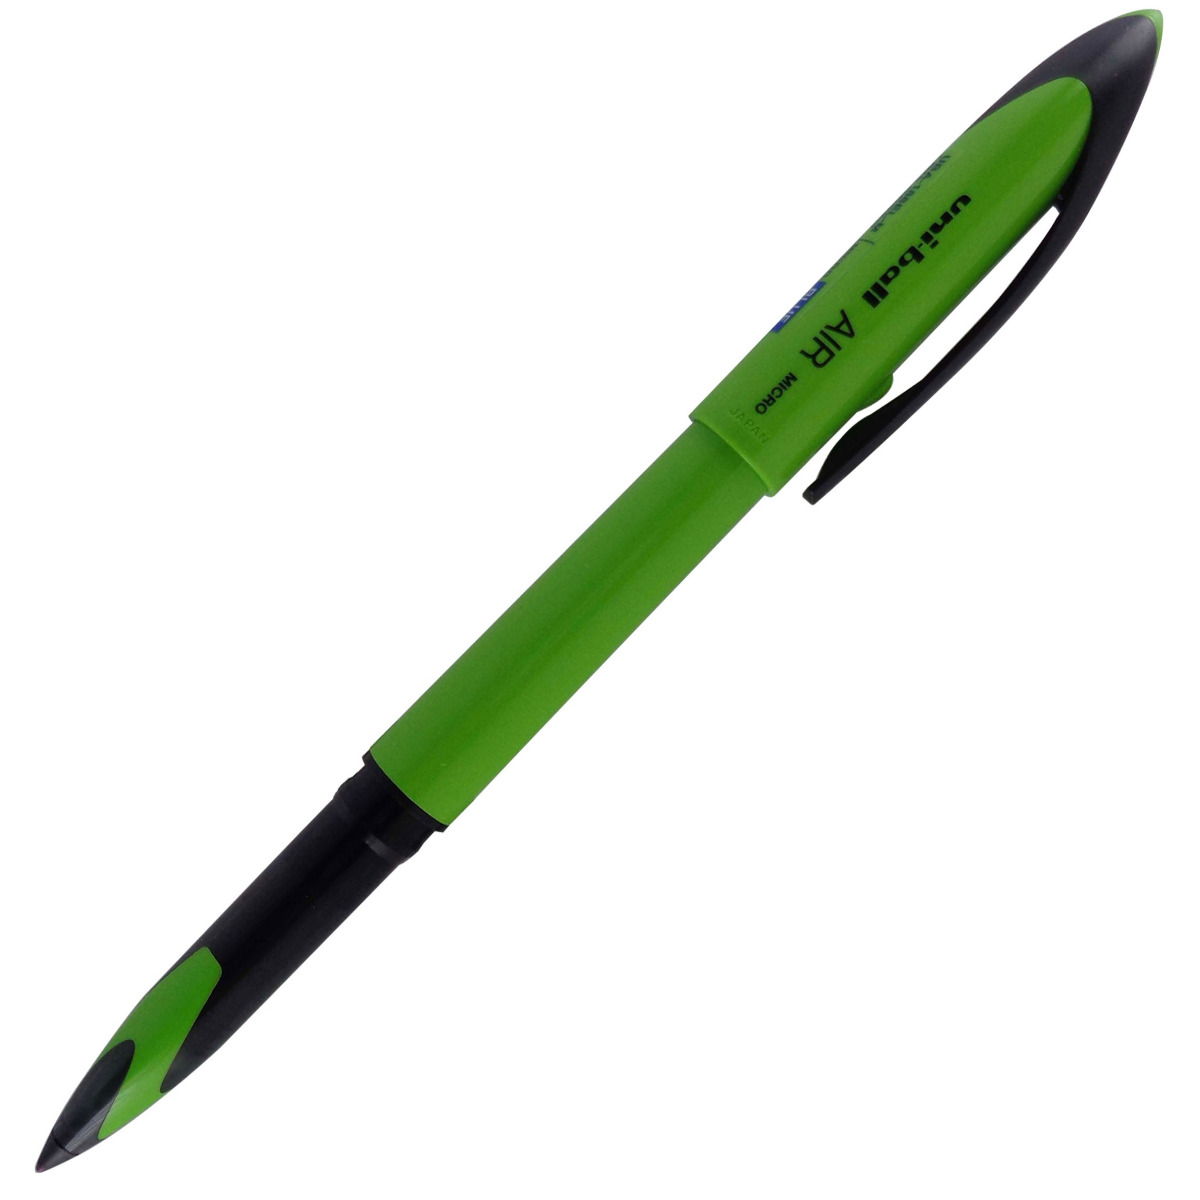 Uniball Air Model: 13877 UBA-188EL-M micro green color body with black clip cap type Medium tip gel pen